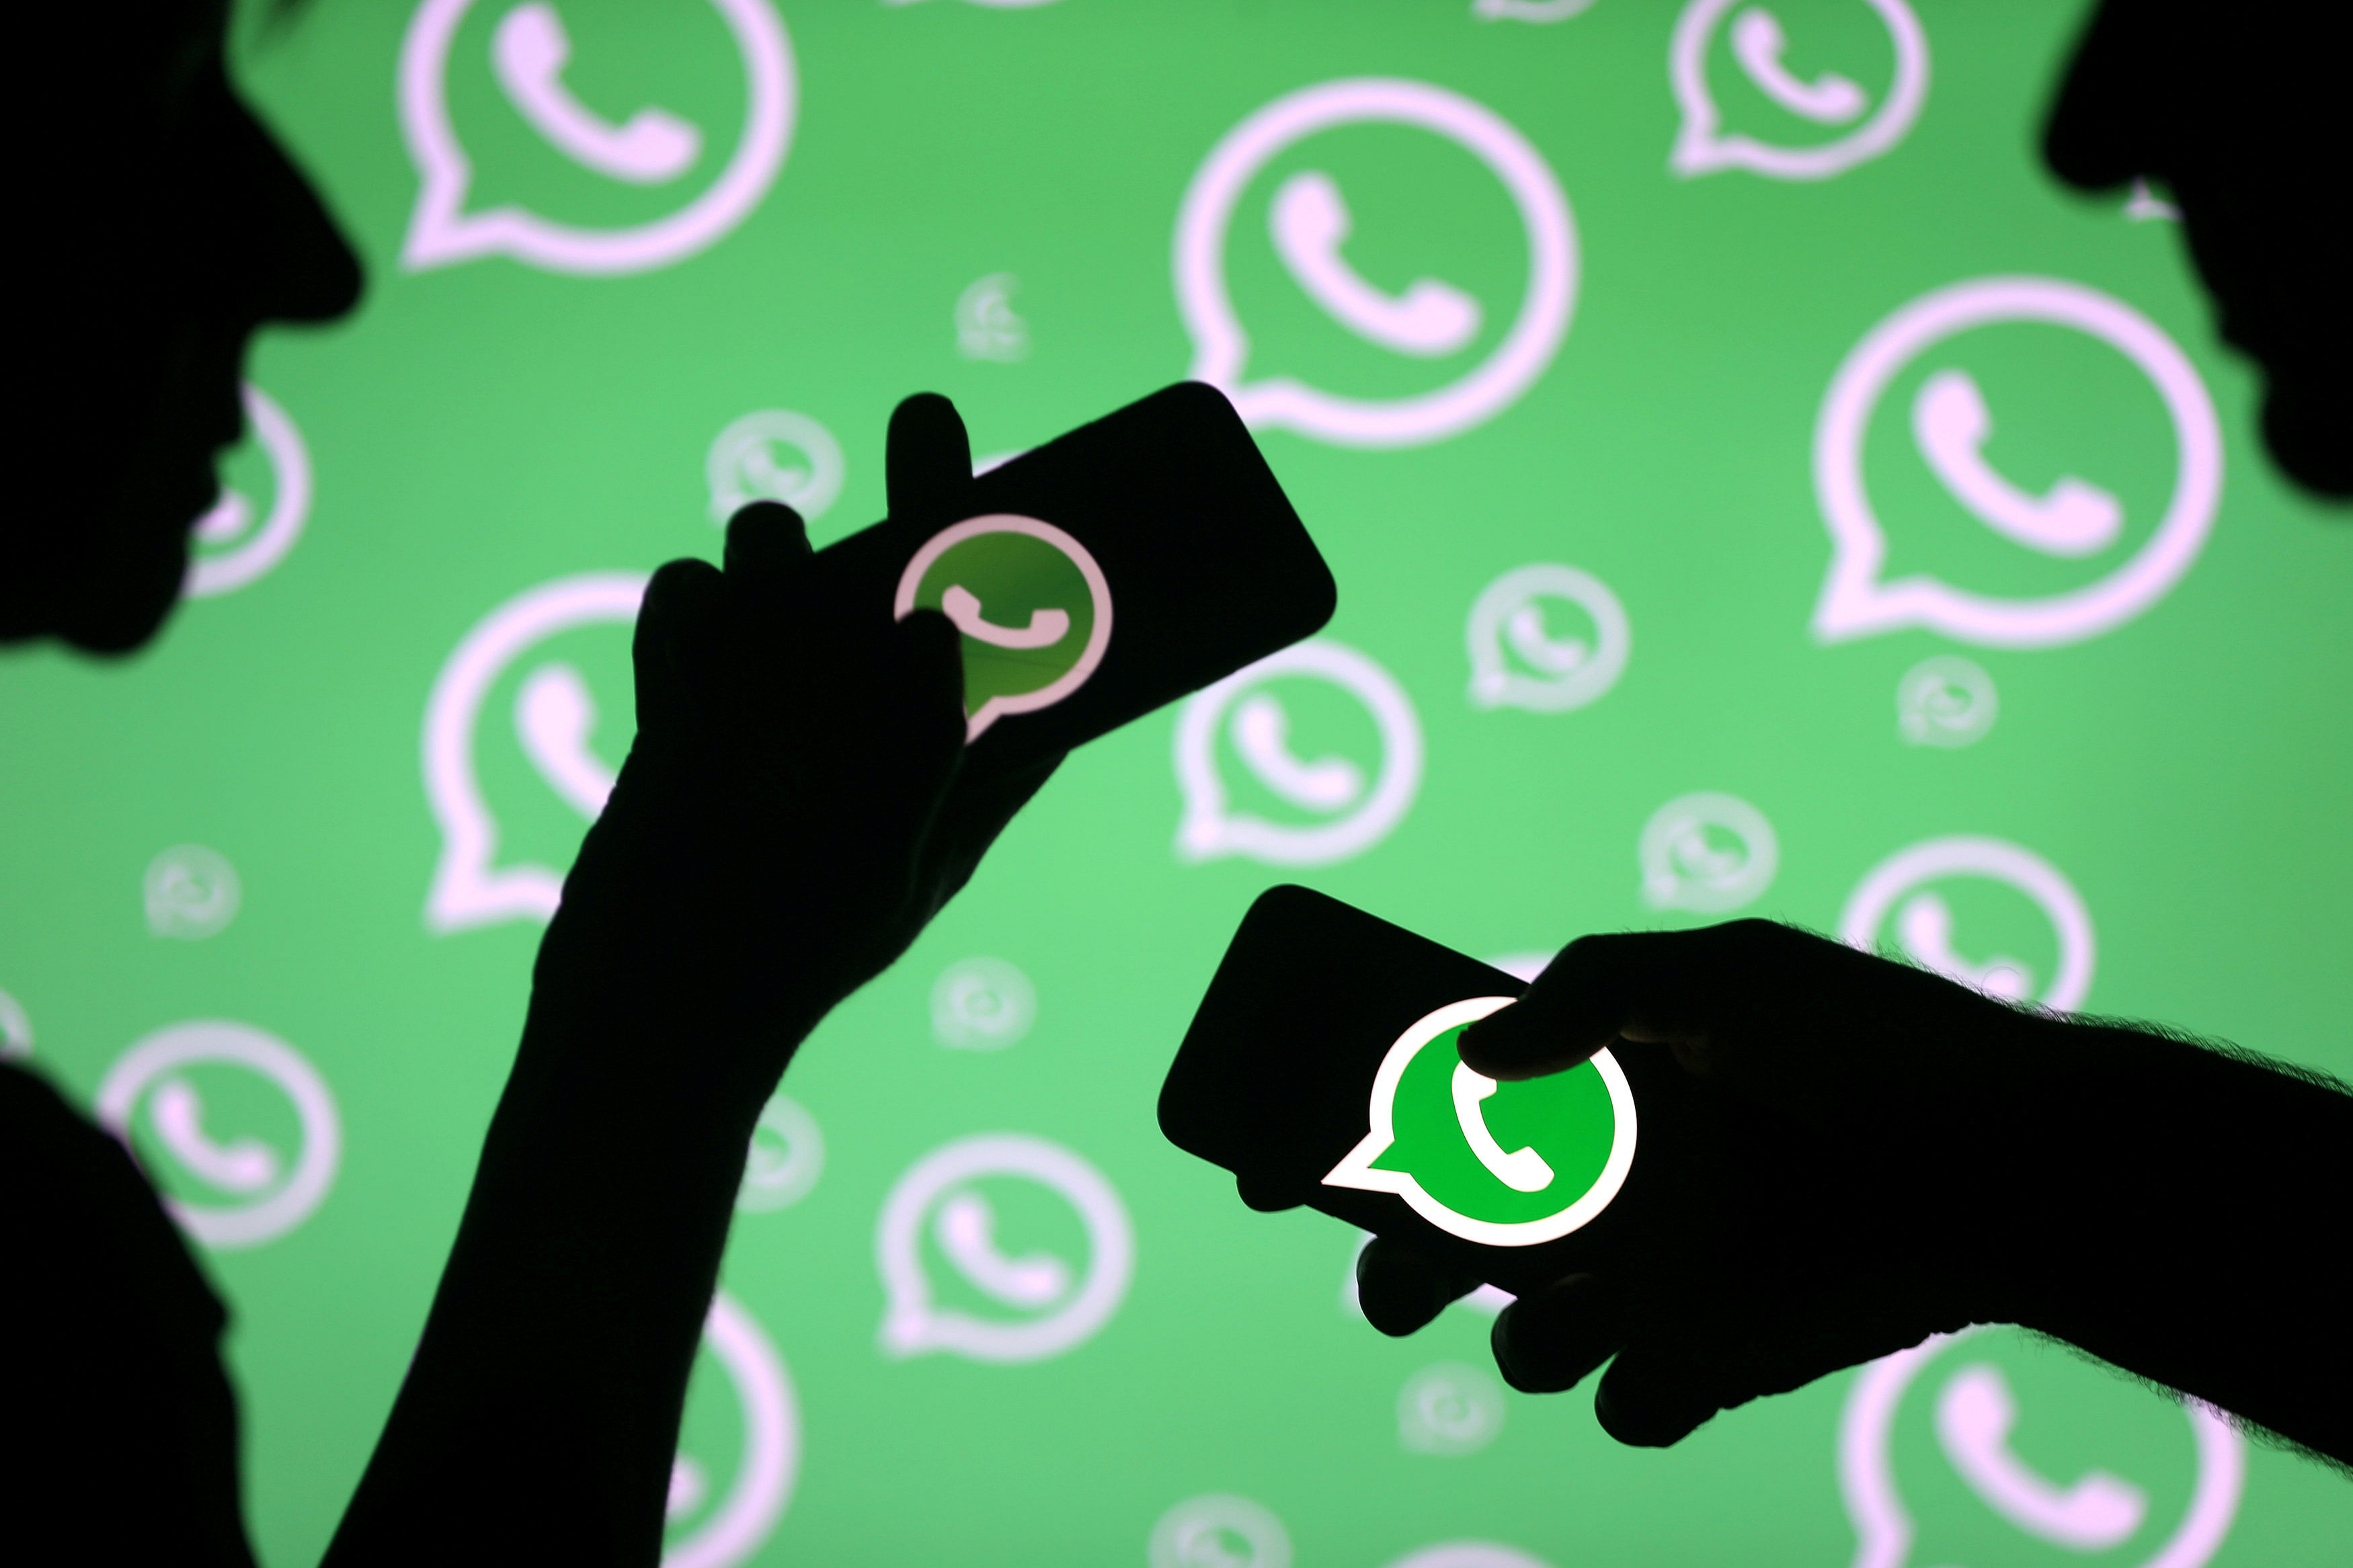  Pegasus spyware used zero-day vulnerability on WhatsApp to track people (WhatsApp logo: Reuters File Photo)